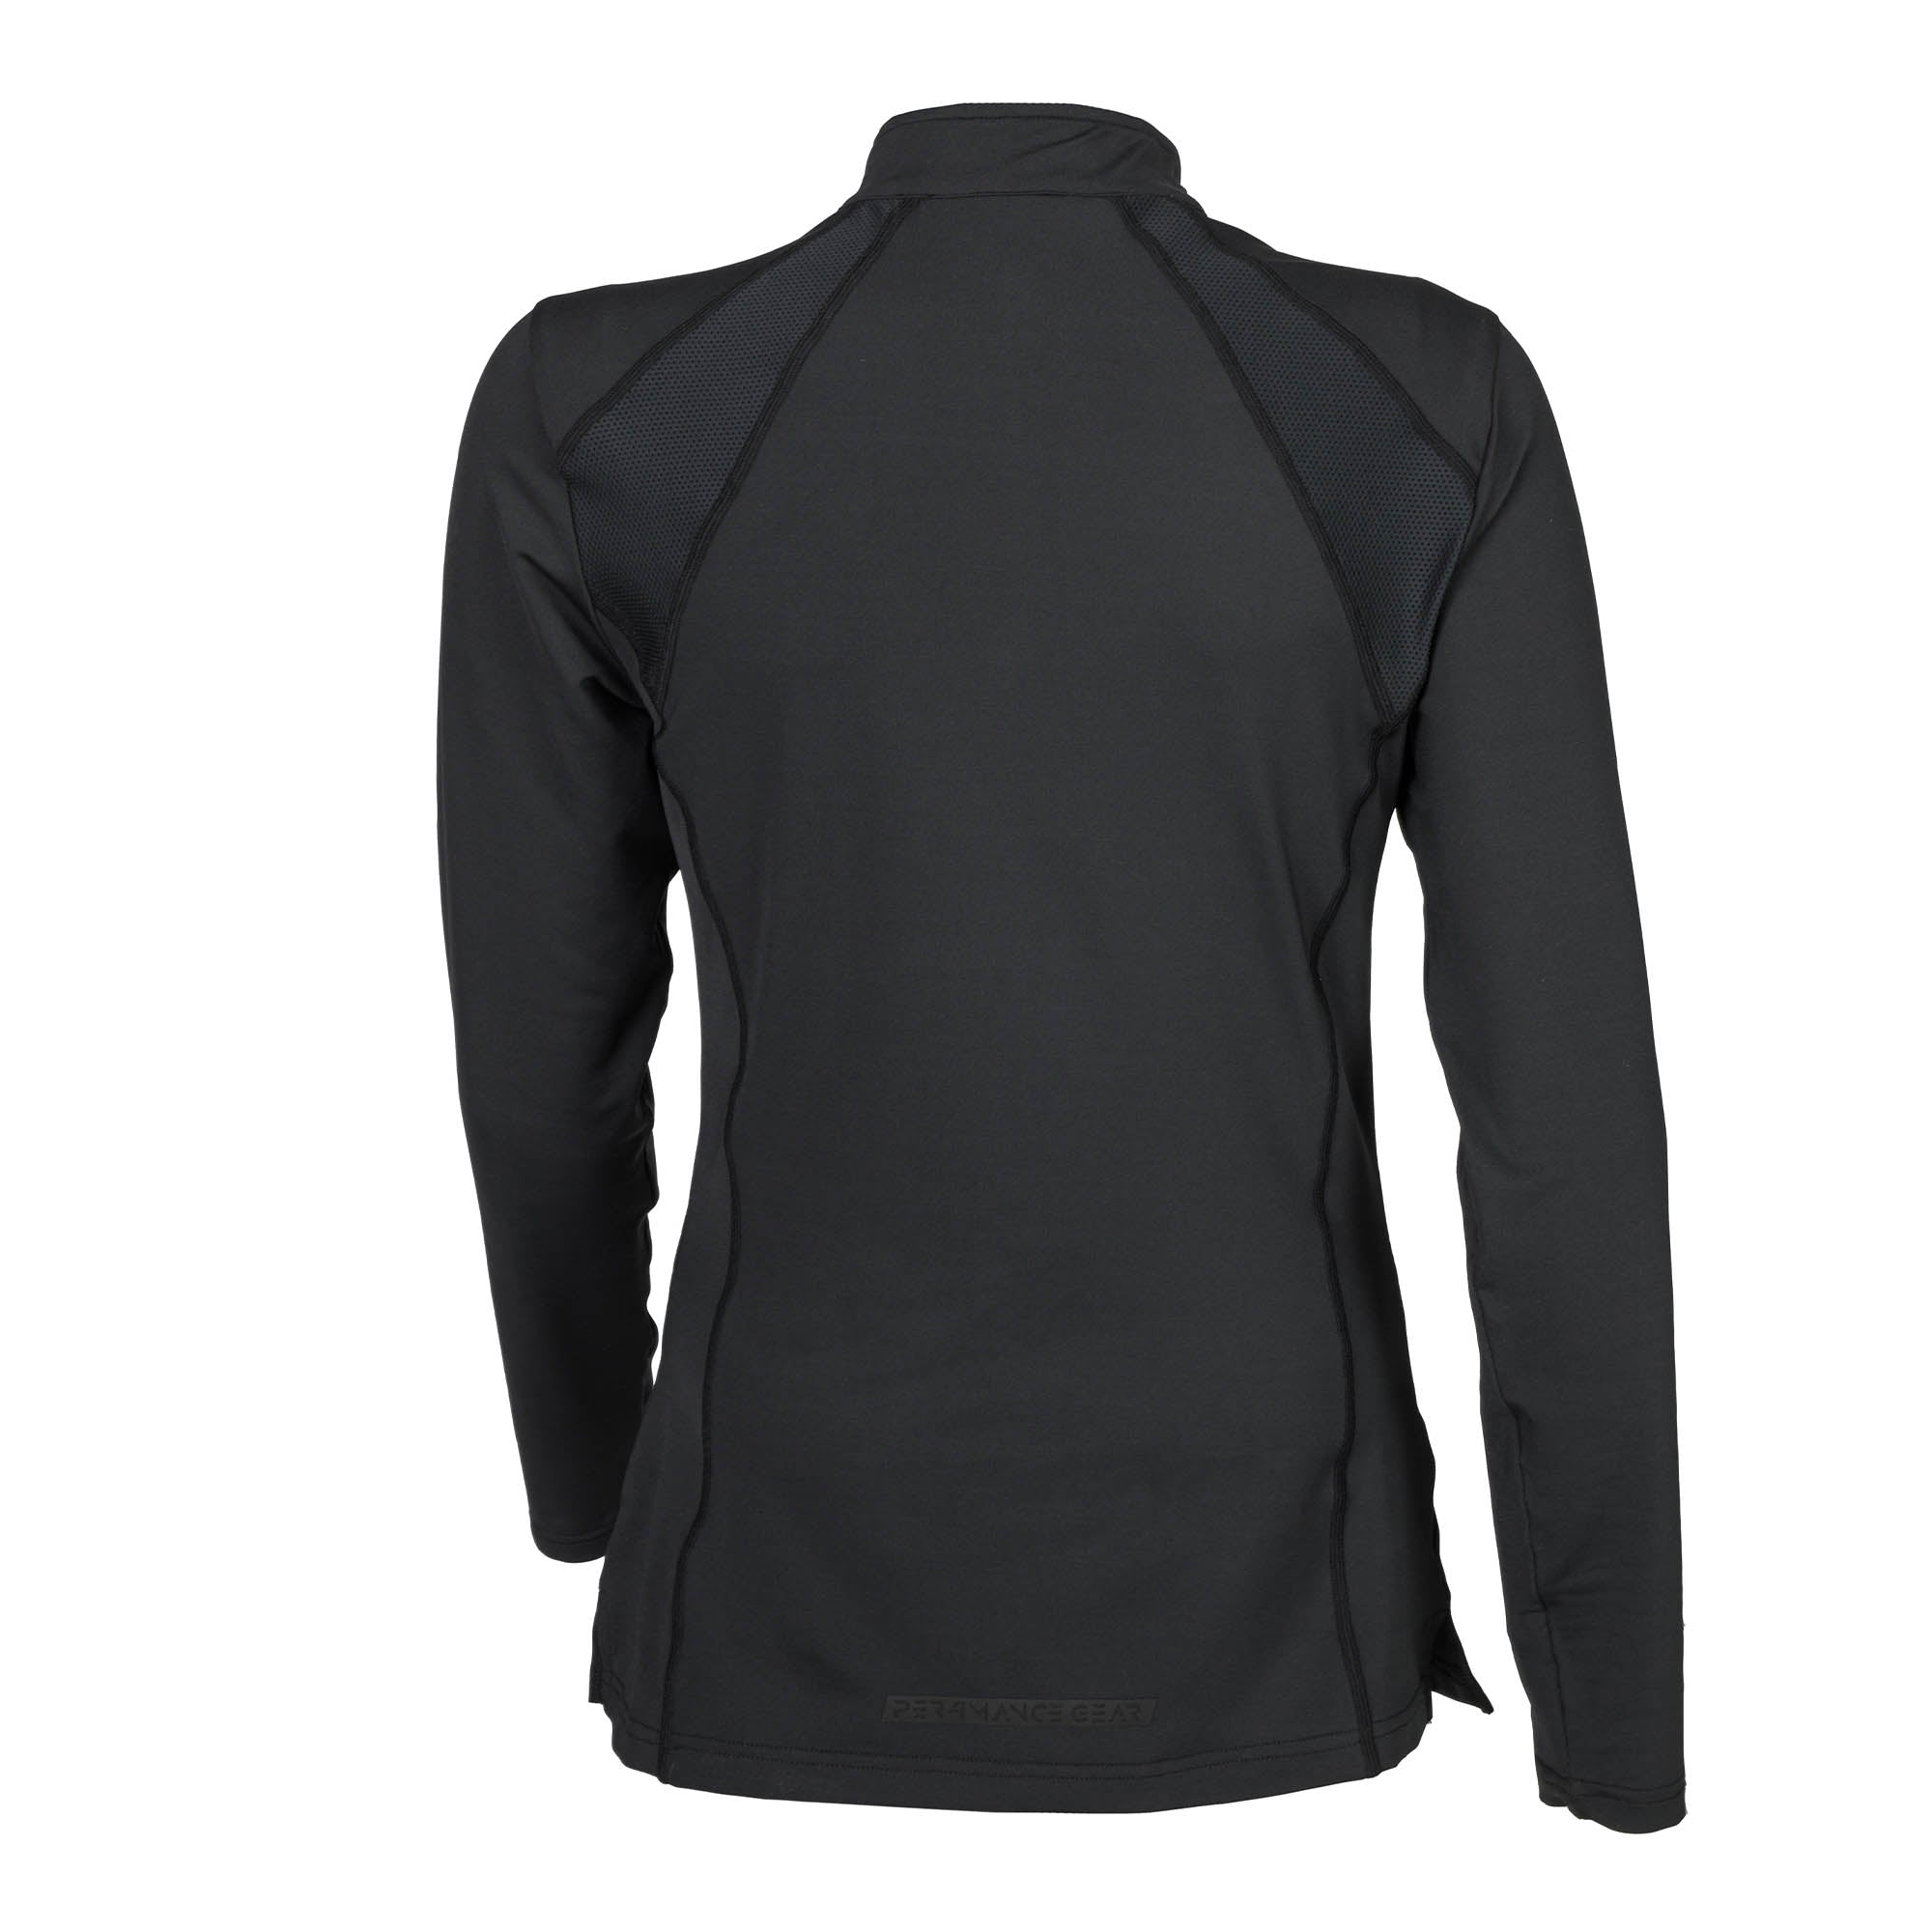 Odele Women's P4G Long Sleeve Shirt | Back on Track USA - Black / XS ...